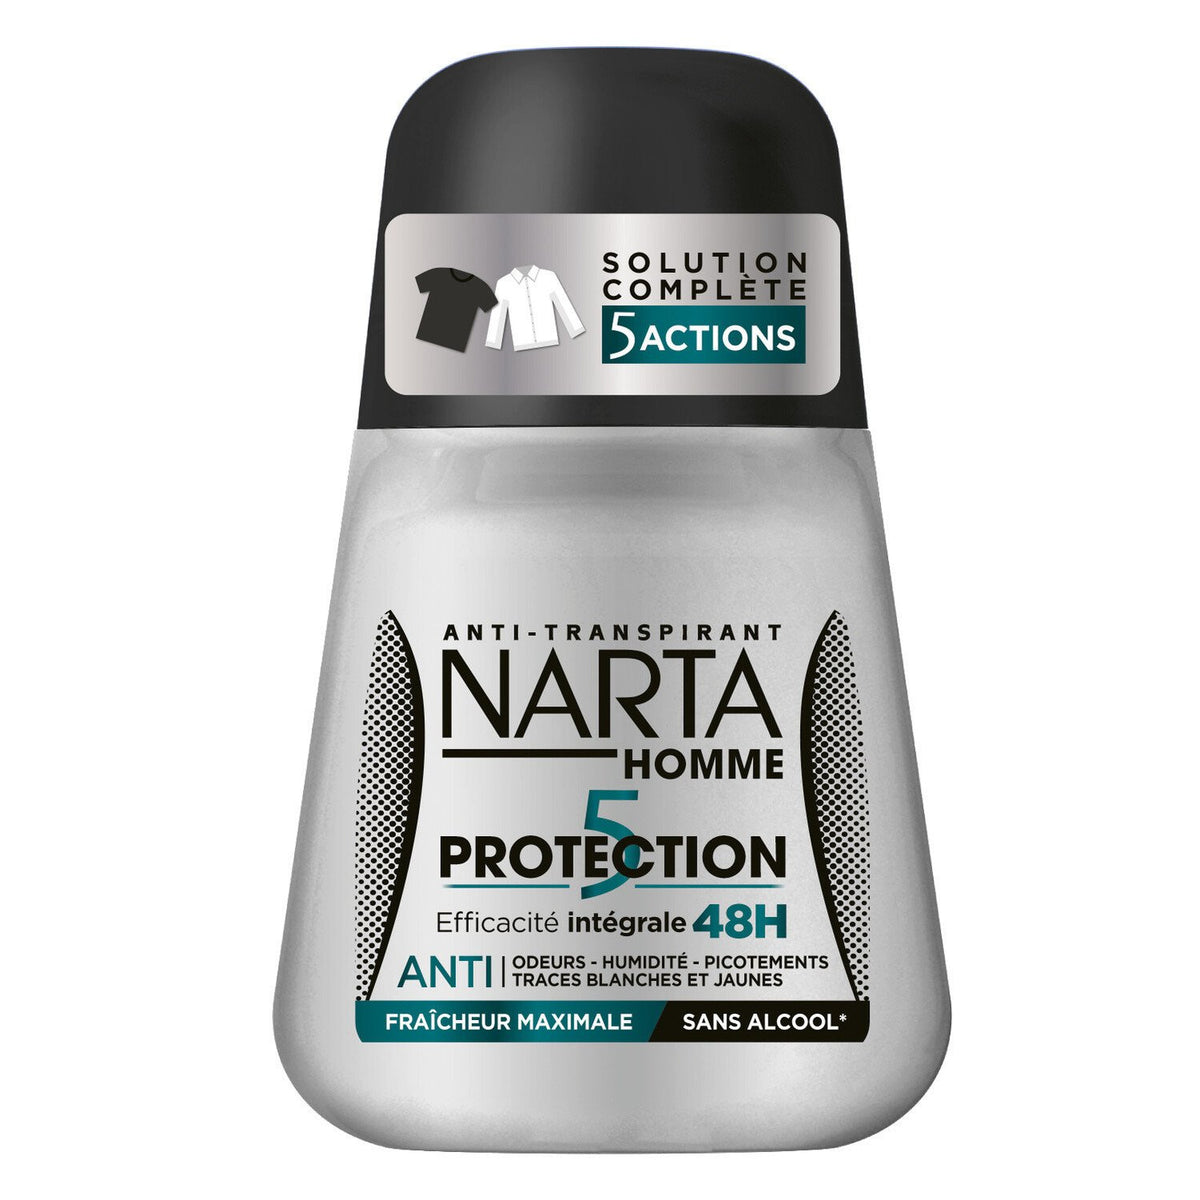 NARTA Déodorant Homme Protection 5 Actions Intégrale 48H 50ml -J94